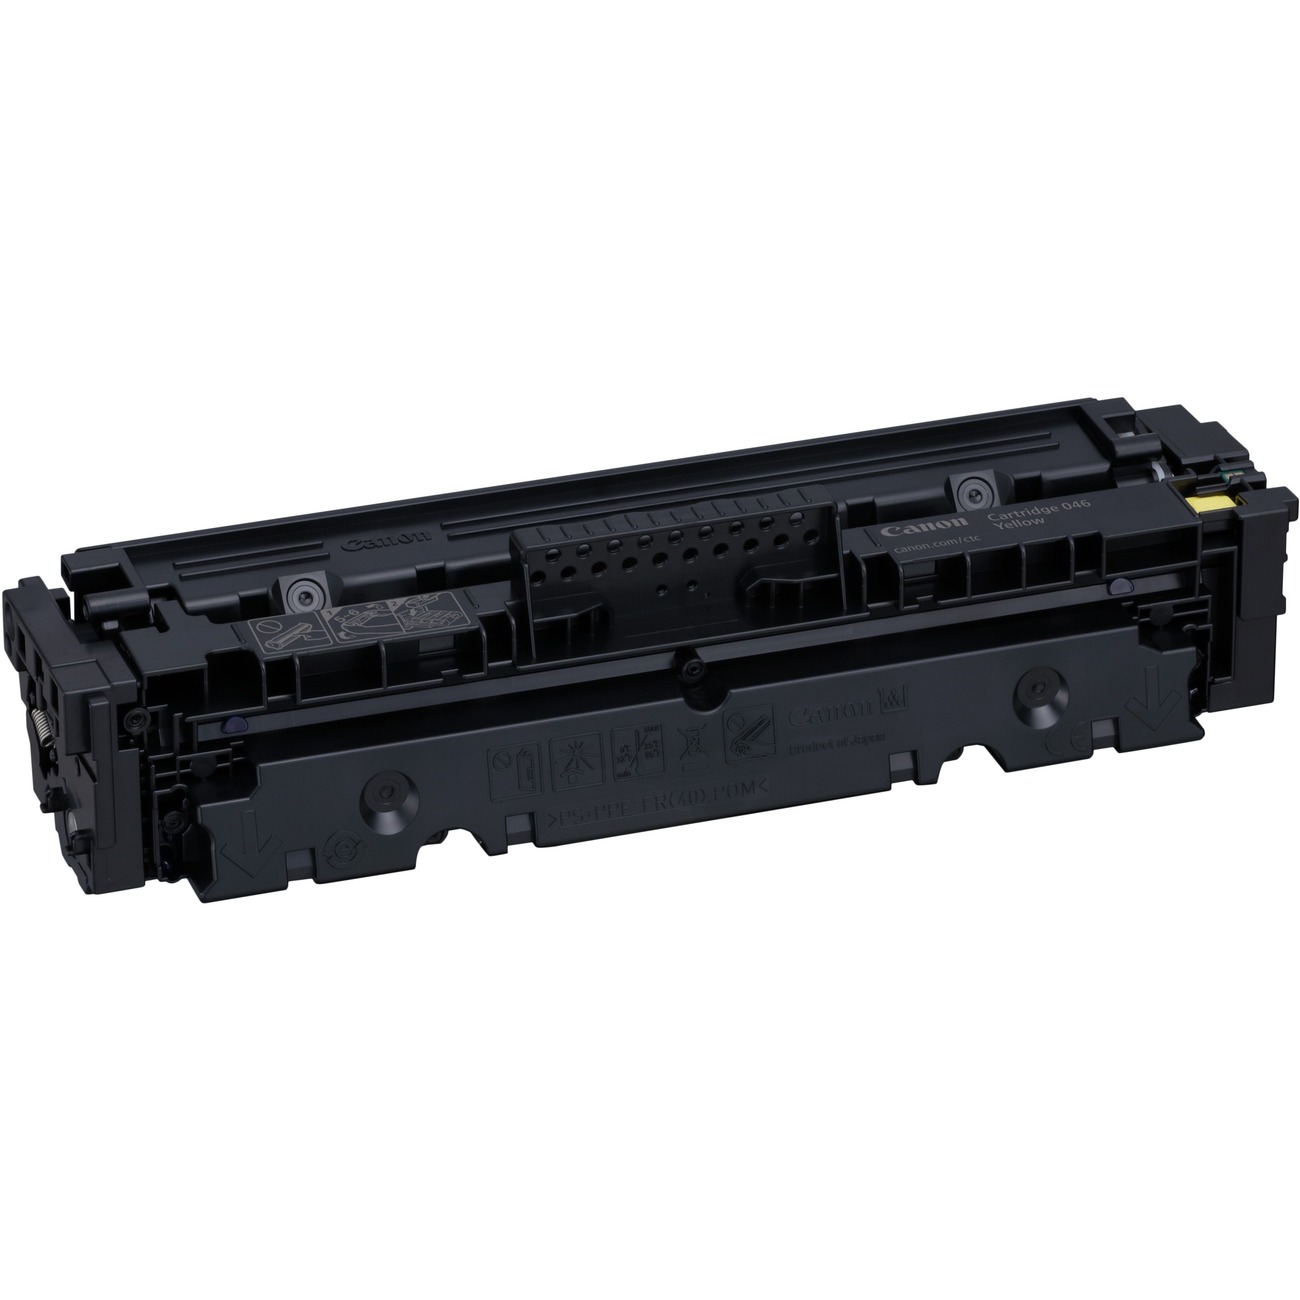 Challenge Industries Ltd. :: Technology :: Printers, Multifunction 